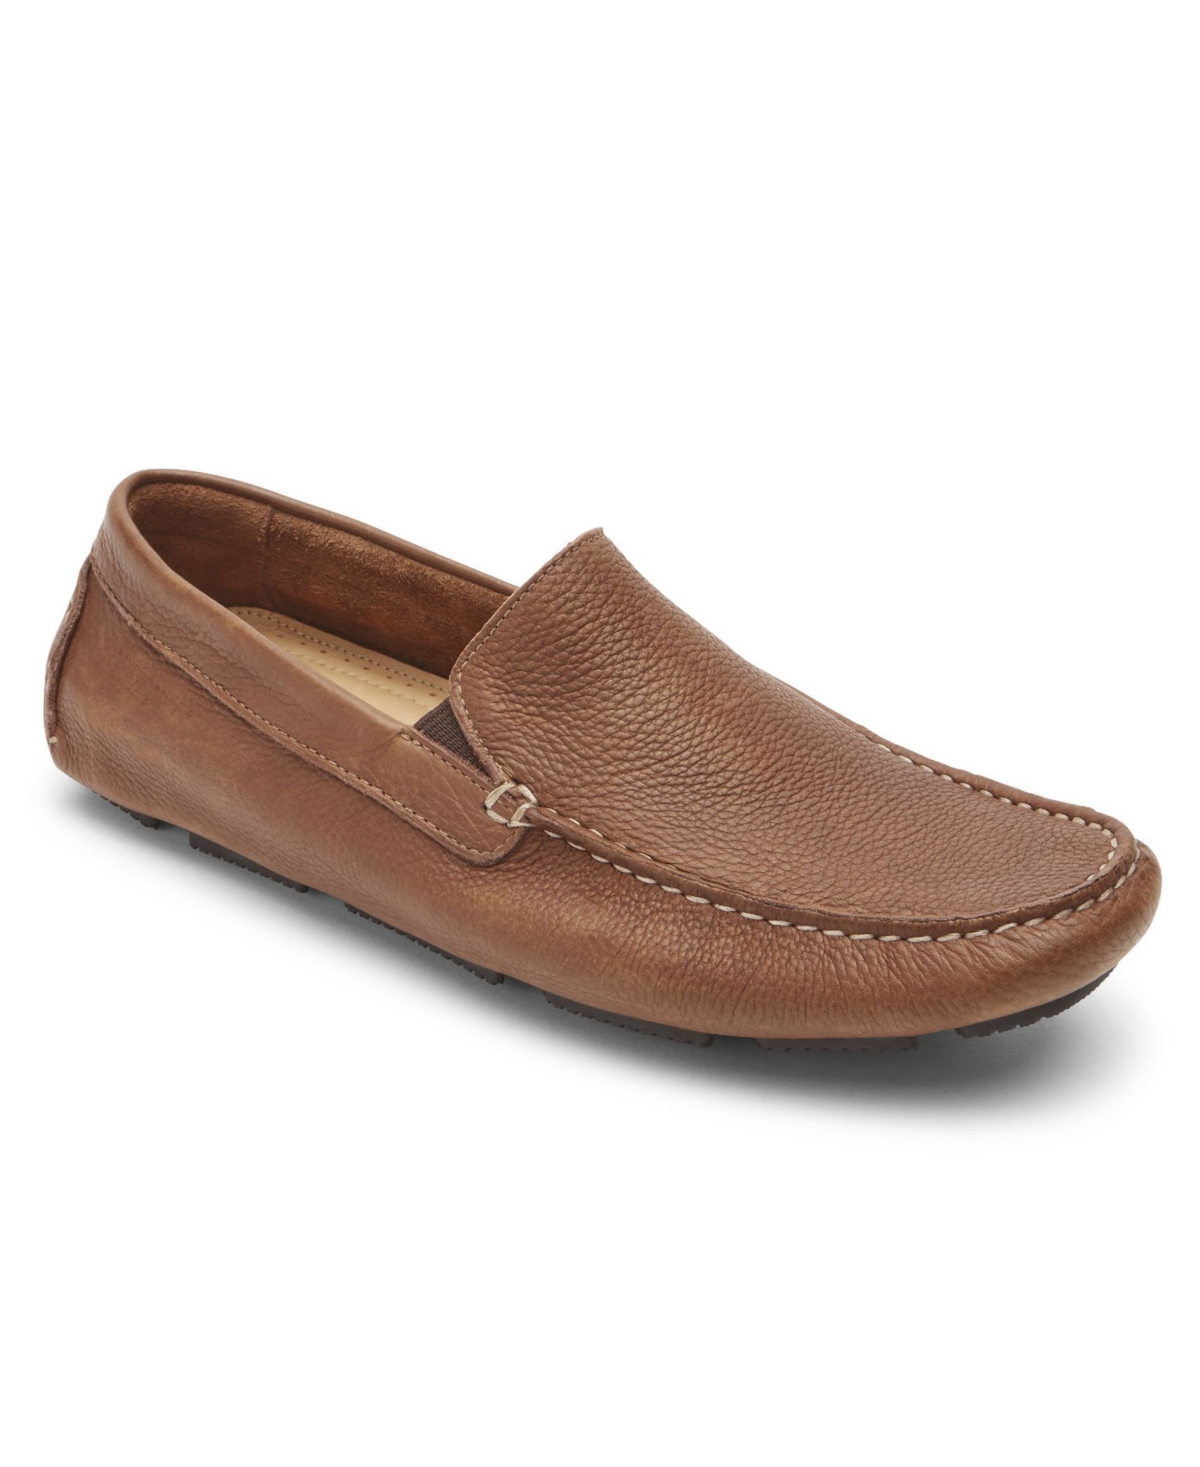 Men's Rhyder Venetian Loafer Shoes - Tan